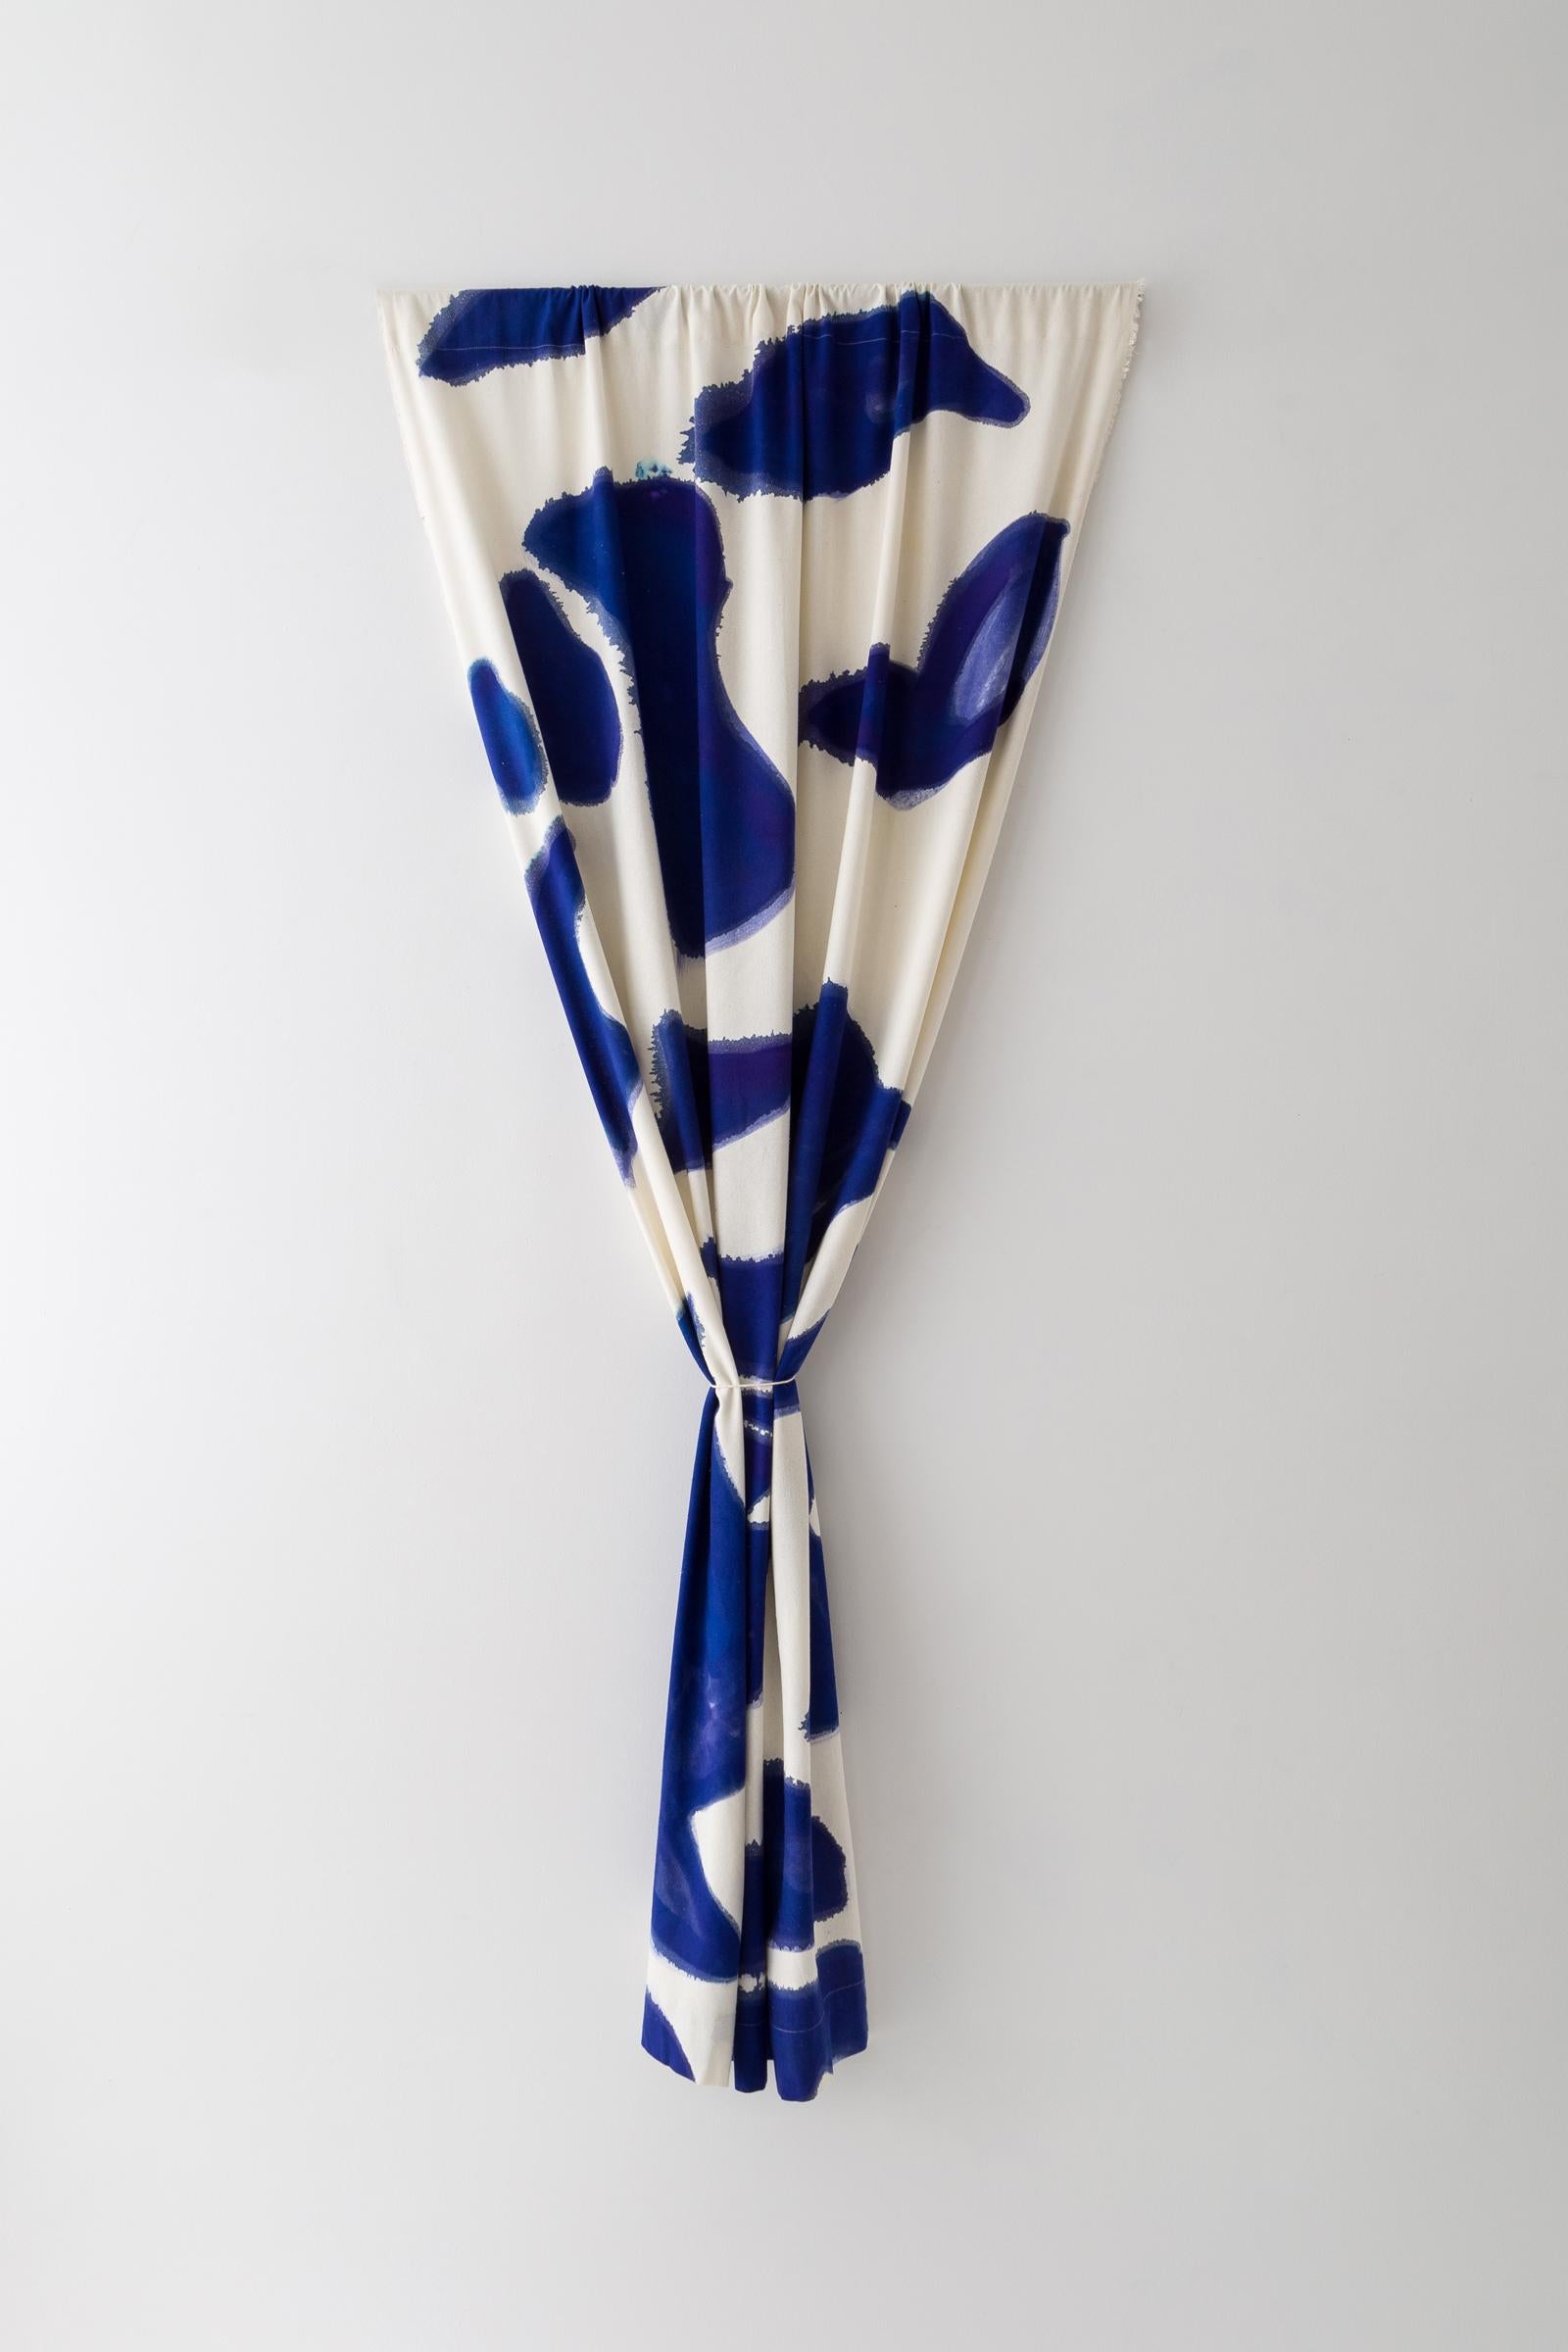 American Silk Noil Single Hue Hand-Painted Blue Amoeba Curtains Fabric Yardage For Sale